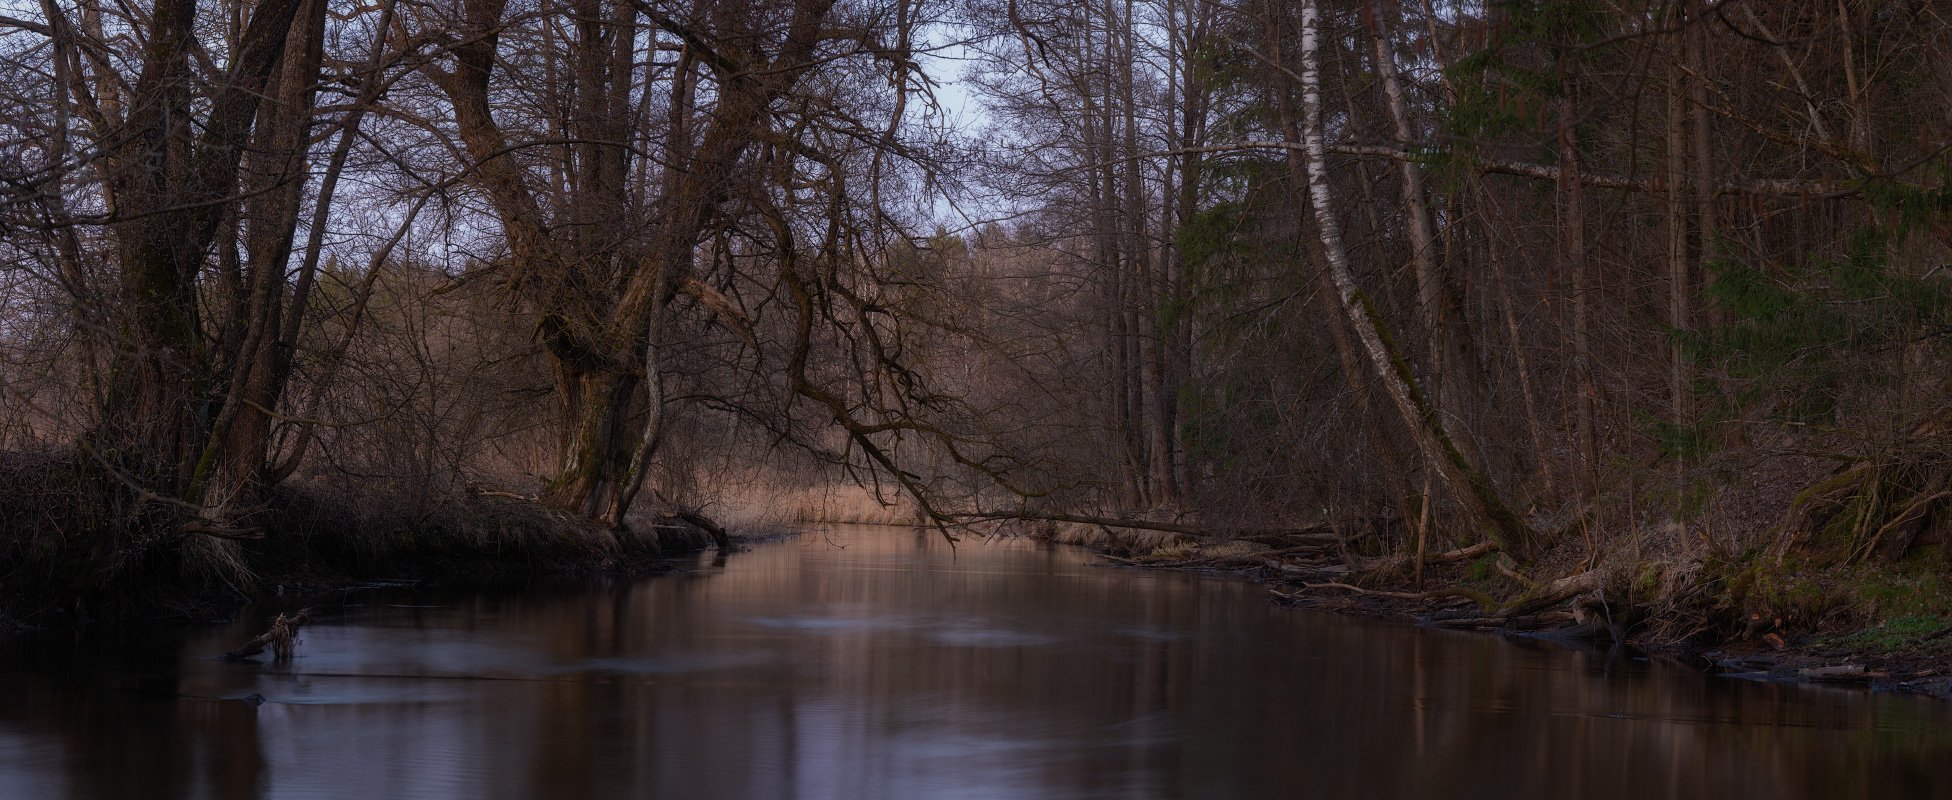 река Уша, весна, река, берега, деревья, Михаил Кушнер